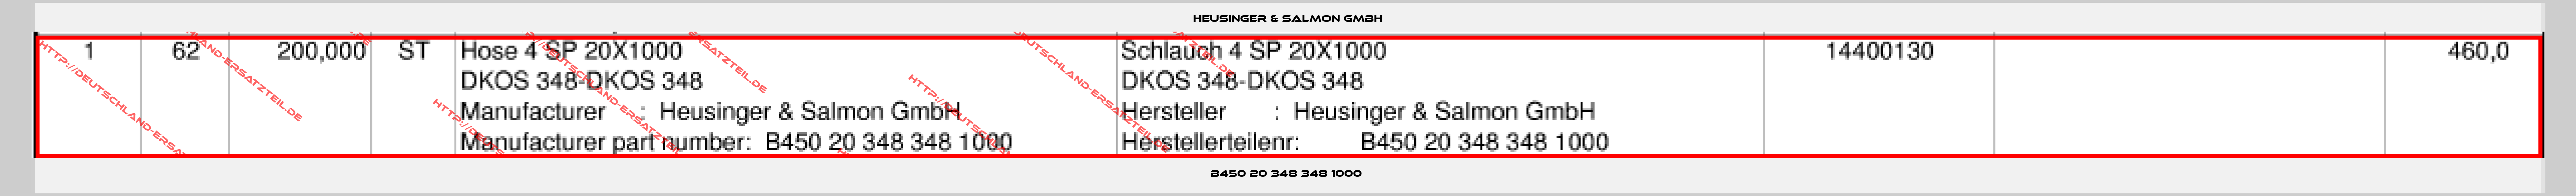 Heusinger & Salmon GmbH-B450 20 348 348 1000 